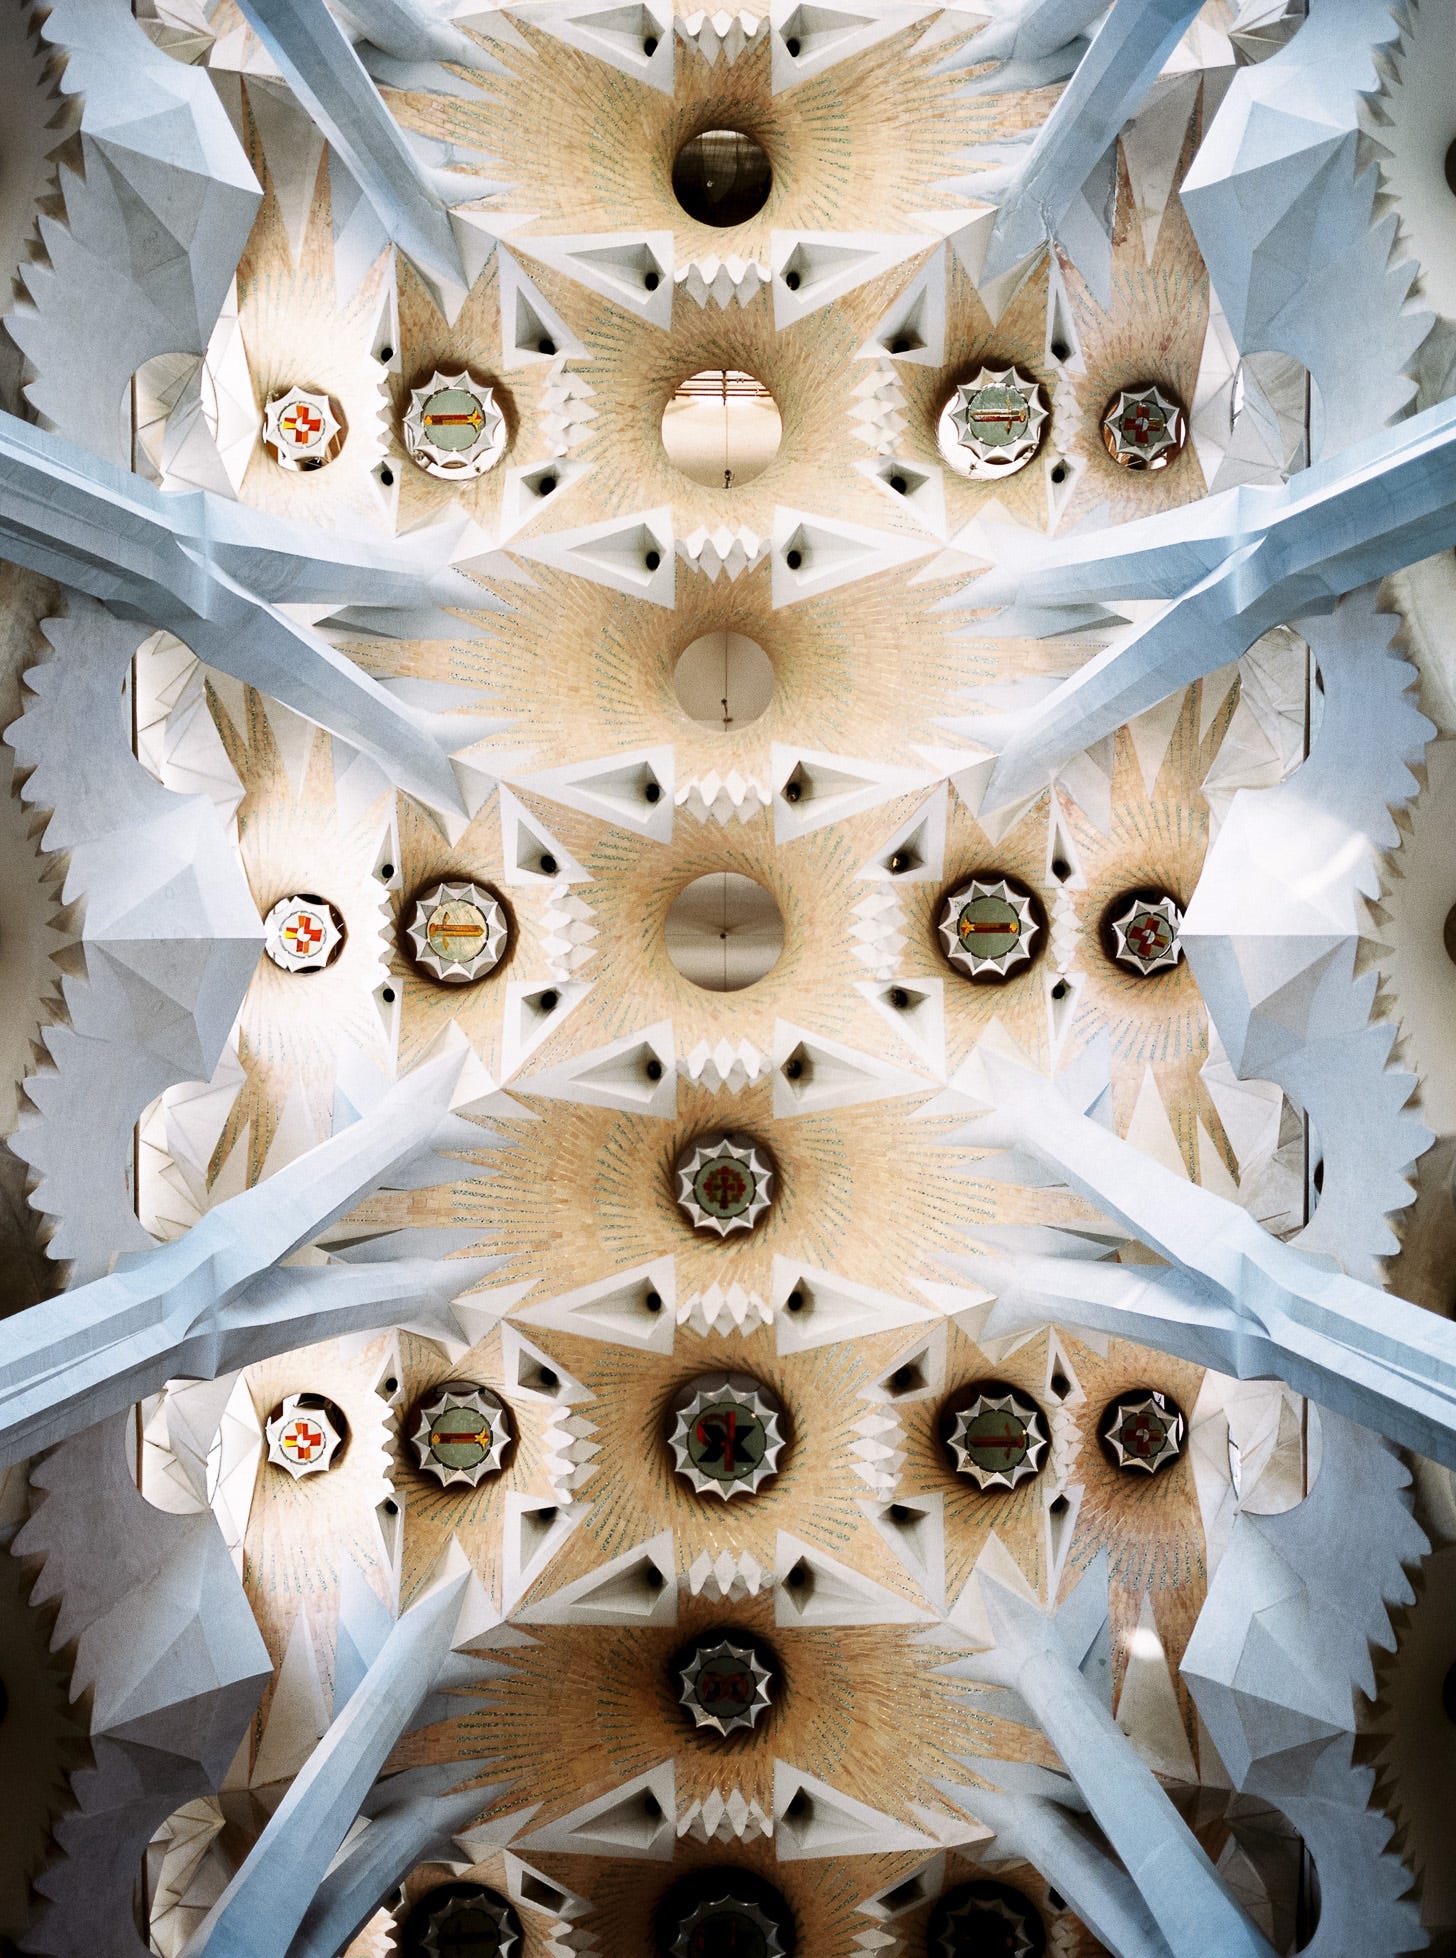 Photo of the Sagrada Familia's ceiling